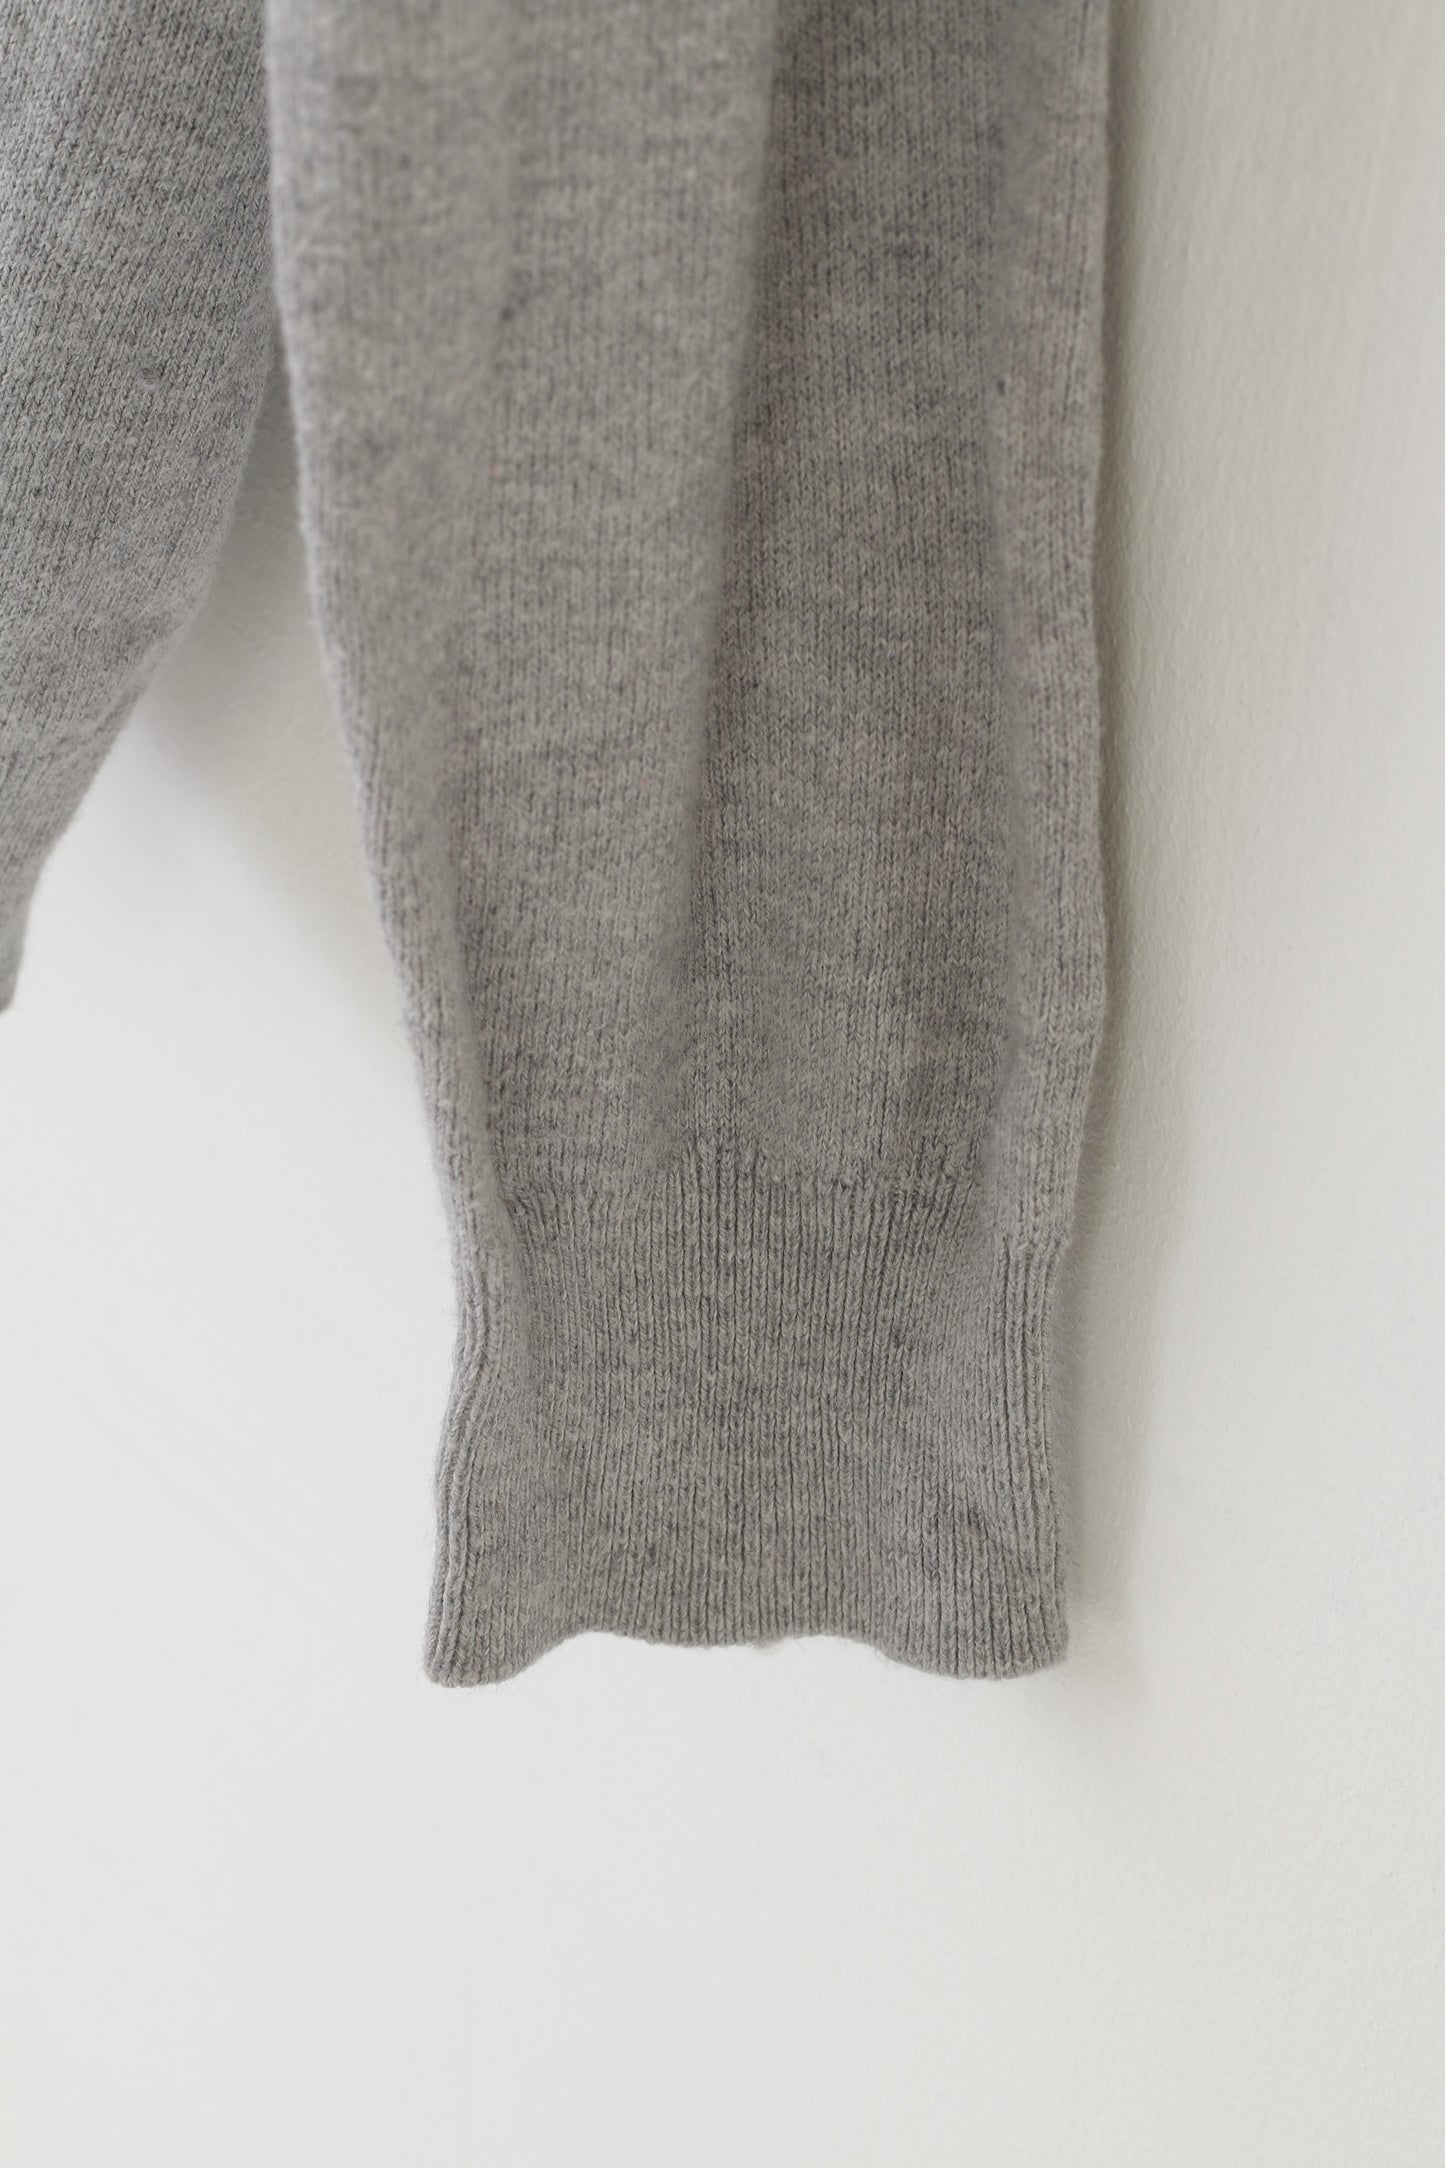 Joules Women L Jumper Gray Cotton Blend Vintage Knitwear V Neck Sweater